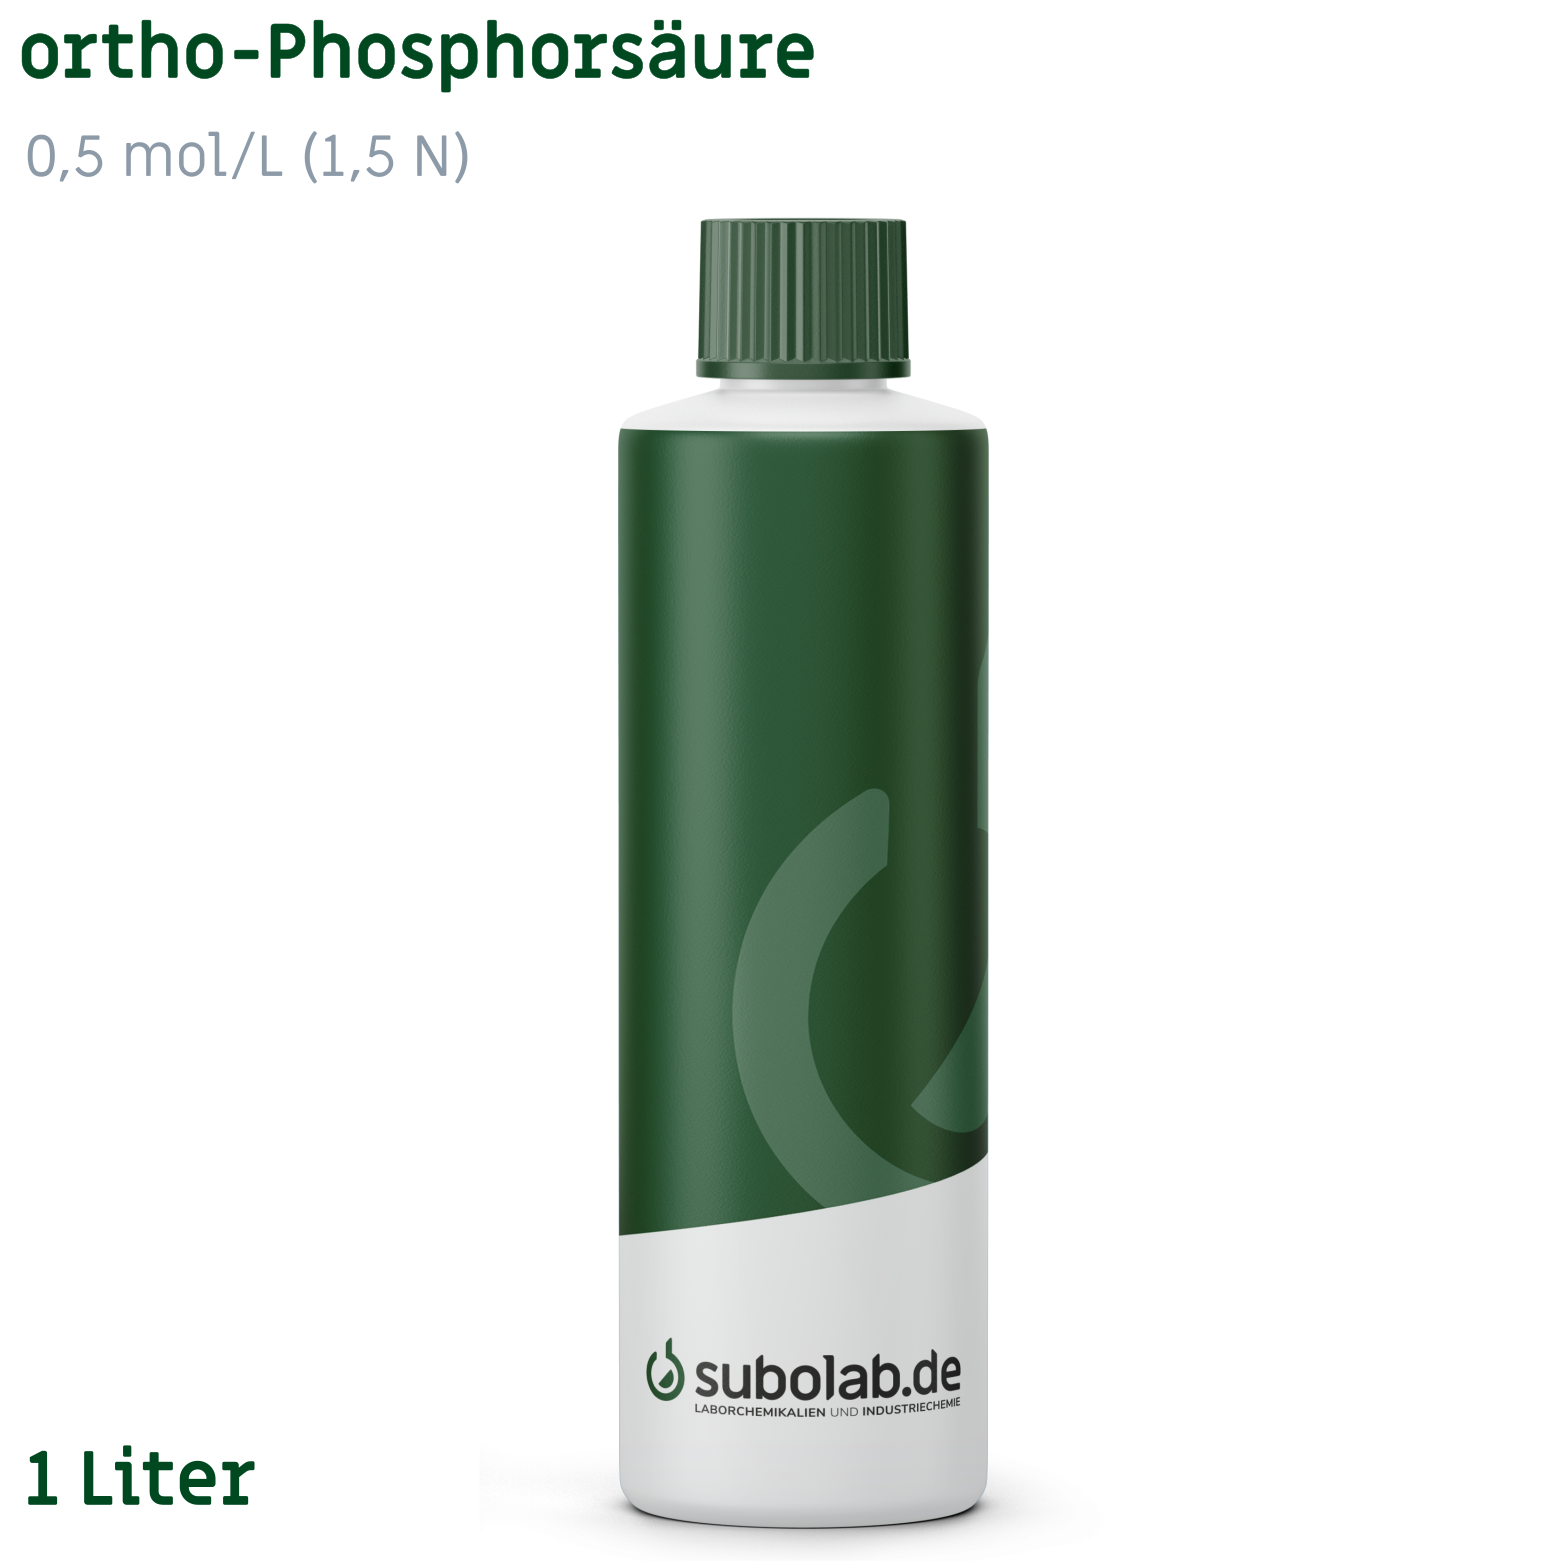 Bild von ortho-Phosphorsäure 0,5 mol/L (1,5 N) (1 Liter)